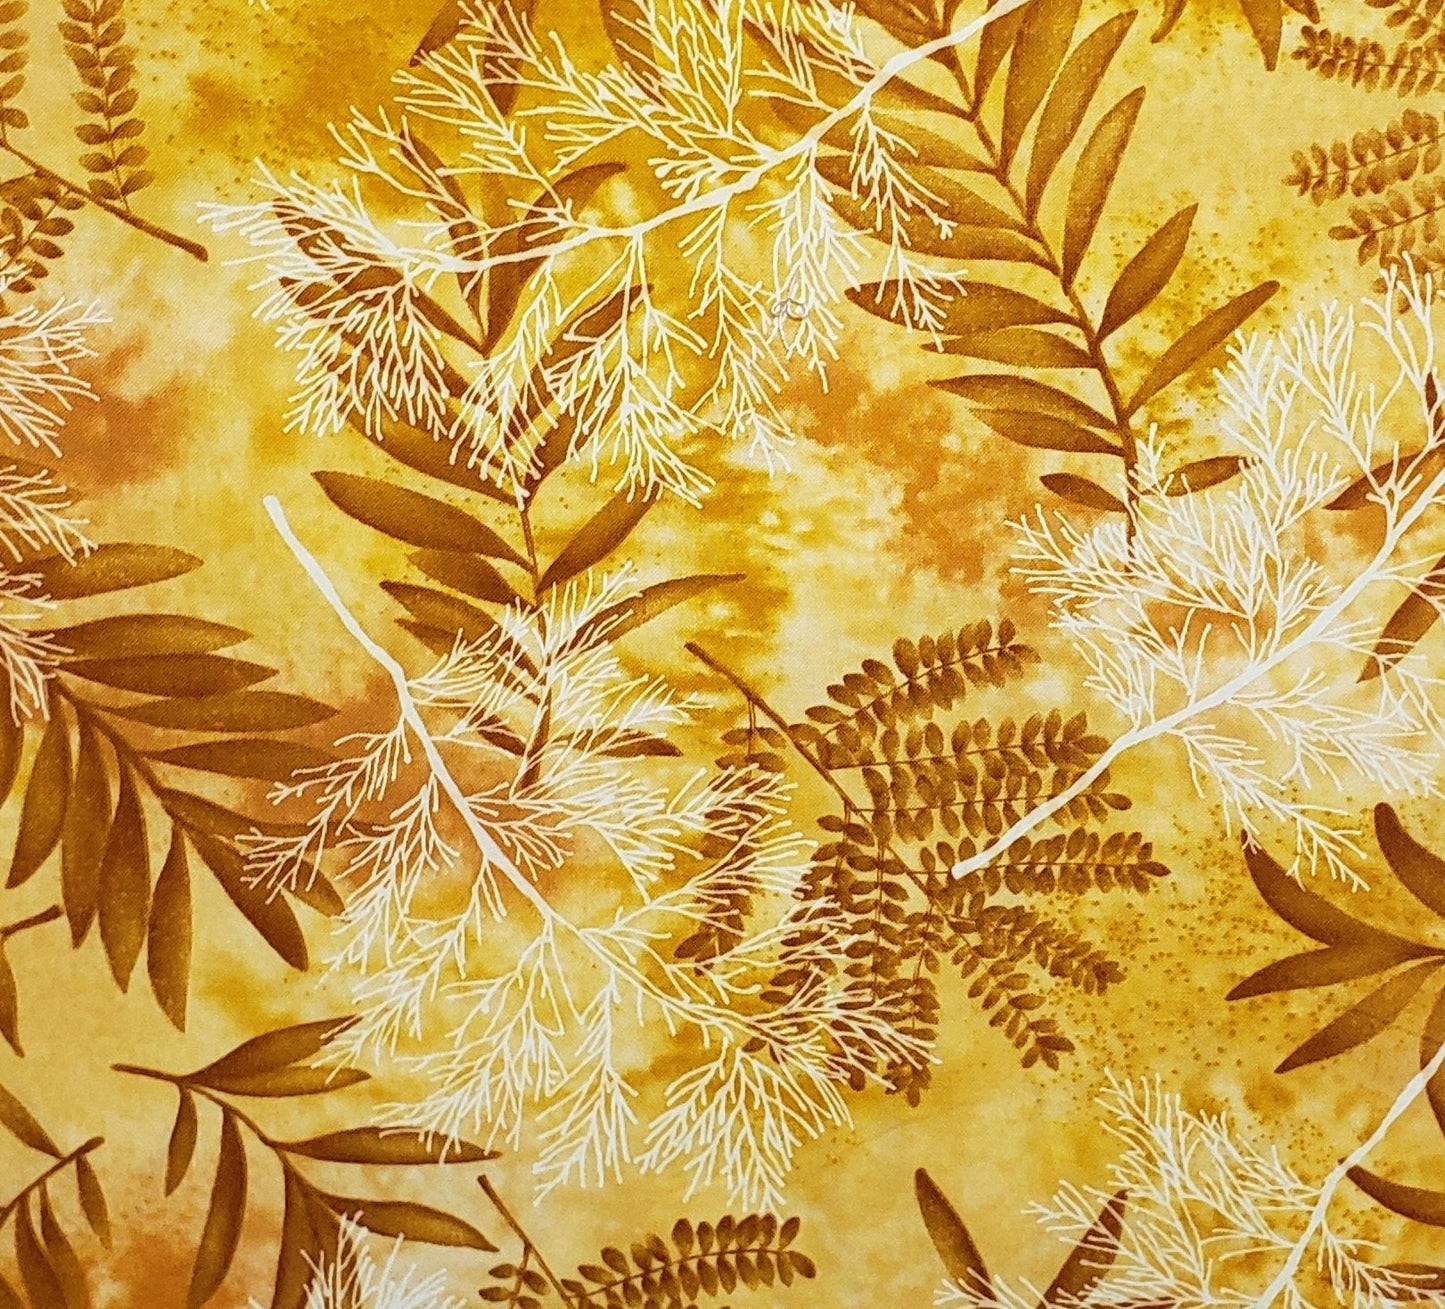 Timeless Treasures Fabrics, Inc. Patt # FERN-C6323 - Dark Yellow and Gold Tonal Fabric / Darker Gold Fern Print and White Branches